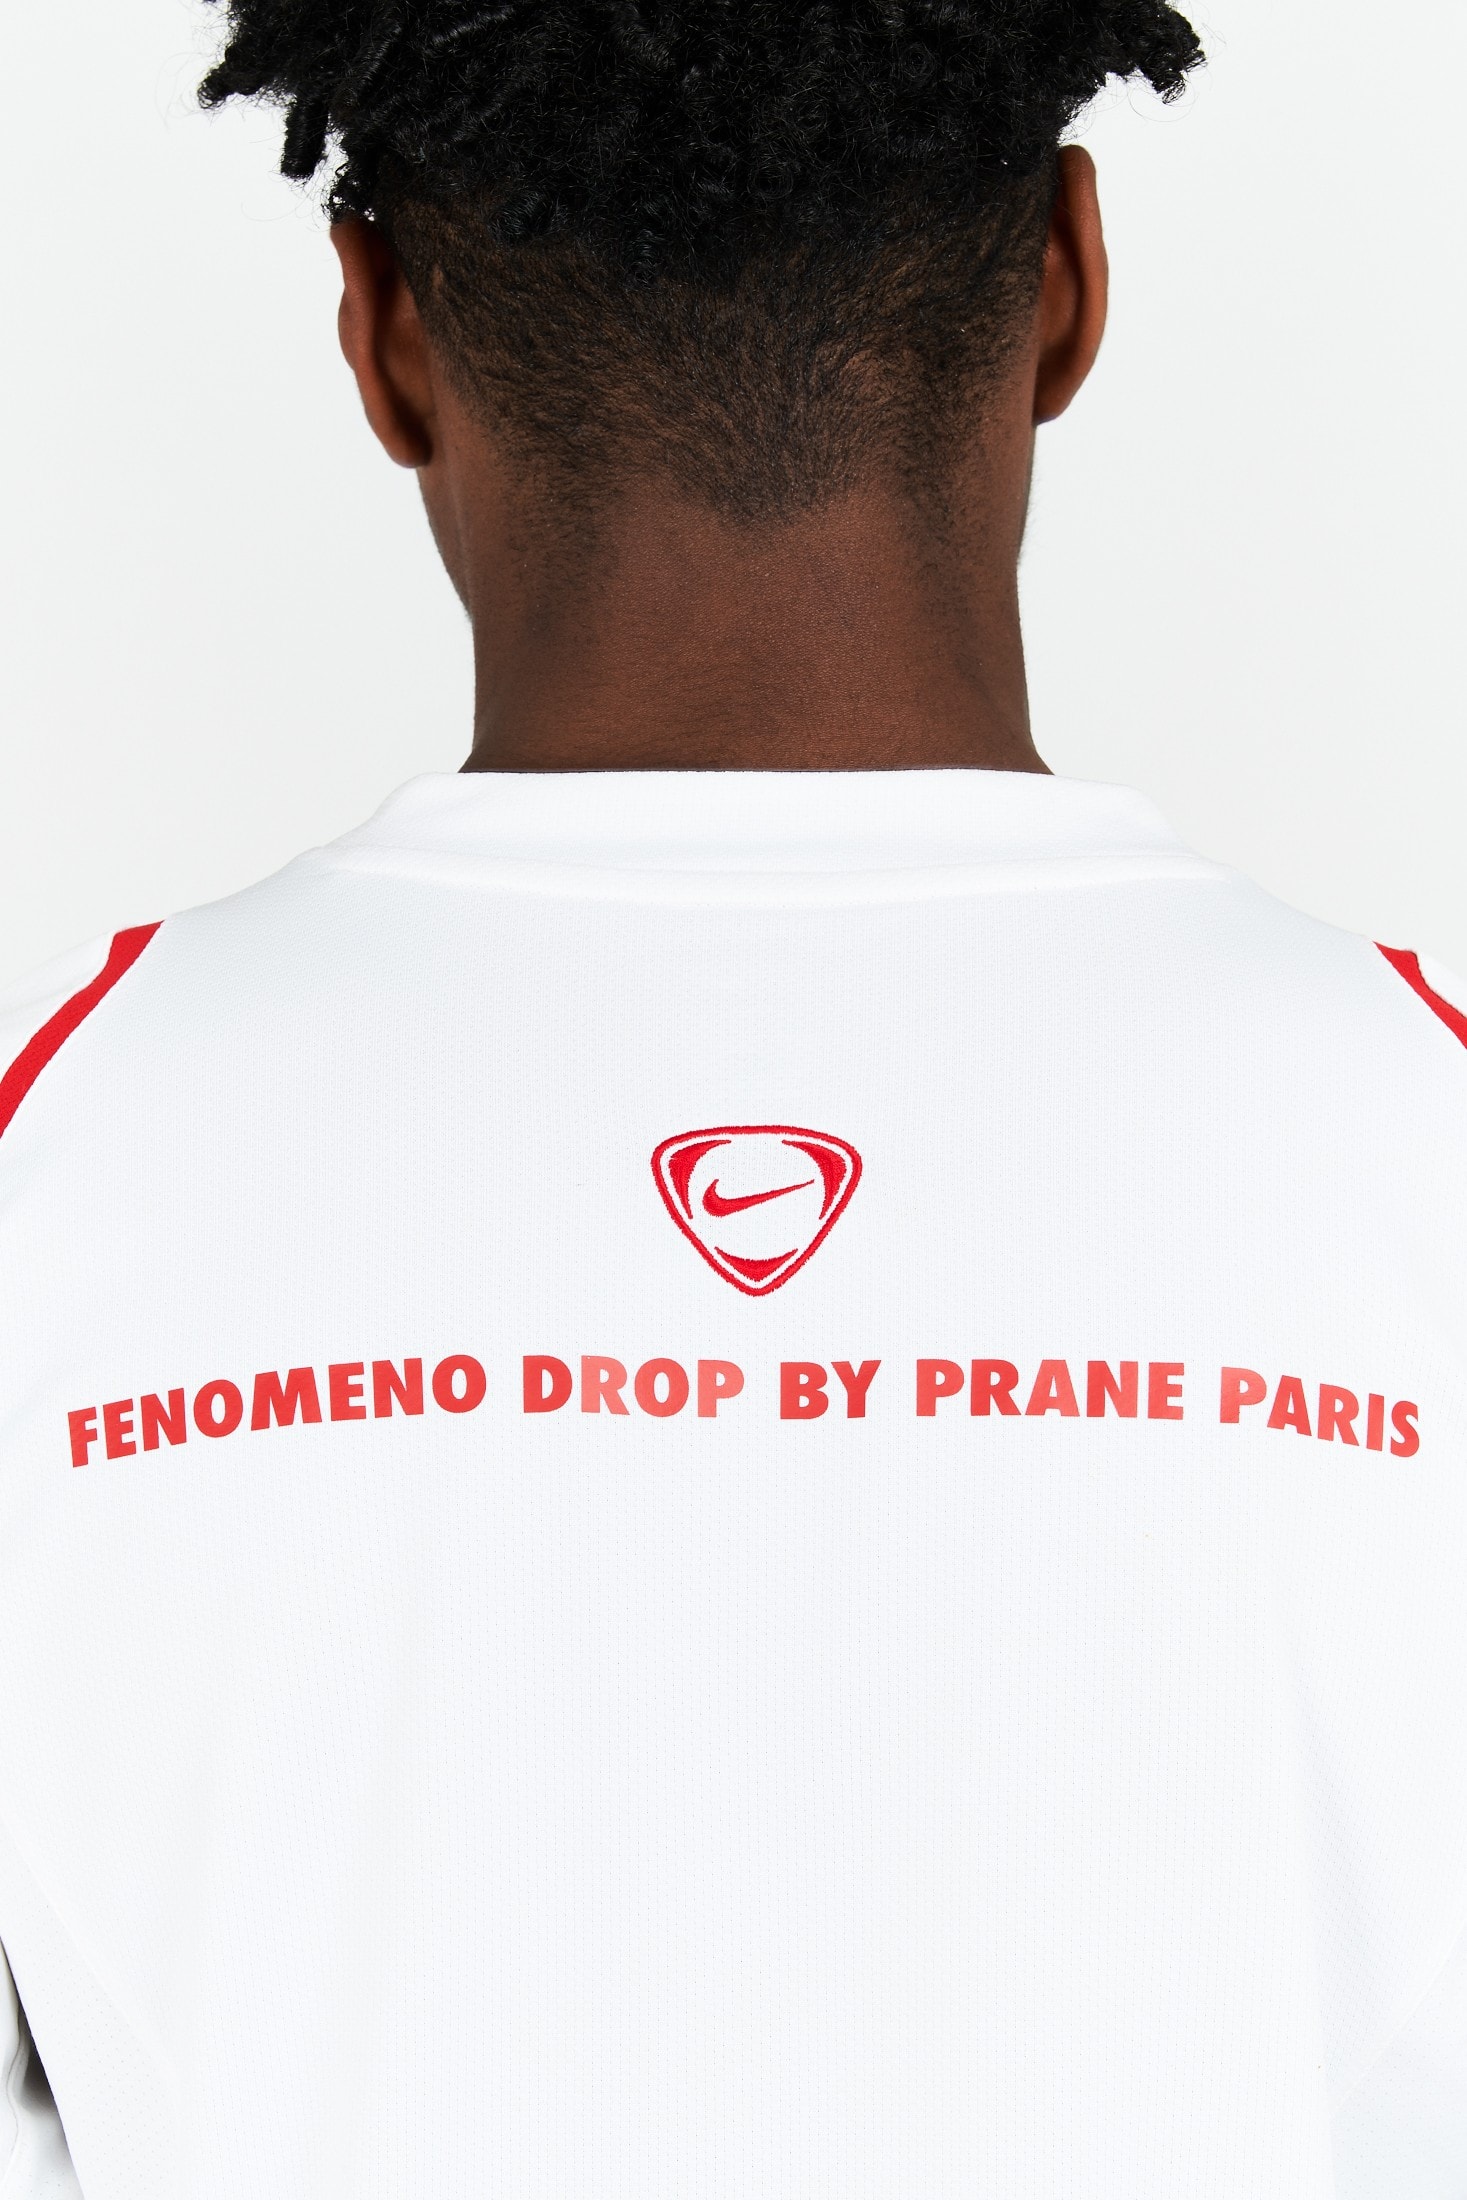 Prane Paris "Fenomeno One.Of.One" Capsule Lookbook soccer football kit brazil ronaldo inter Milan prielli 